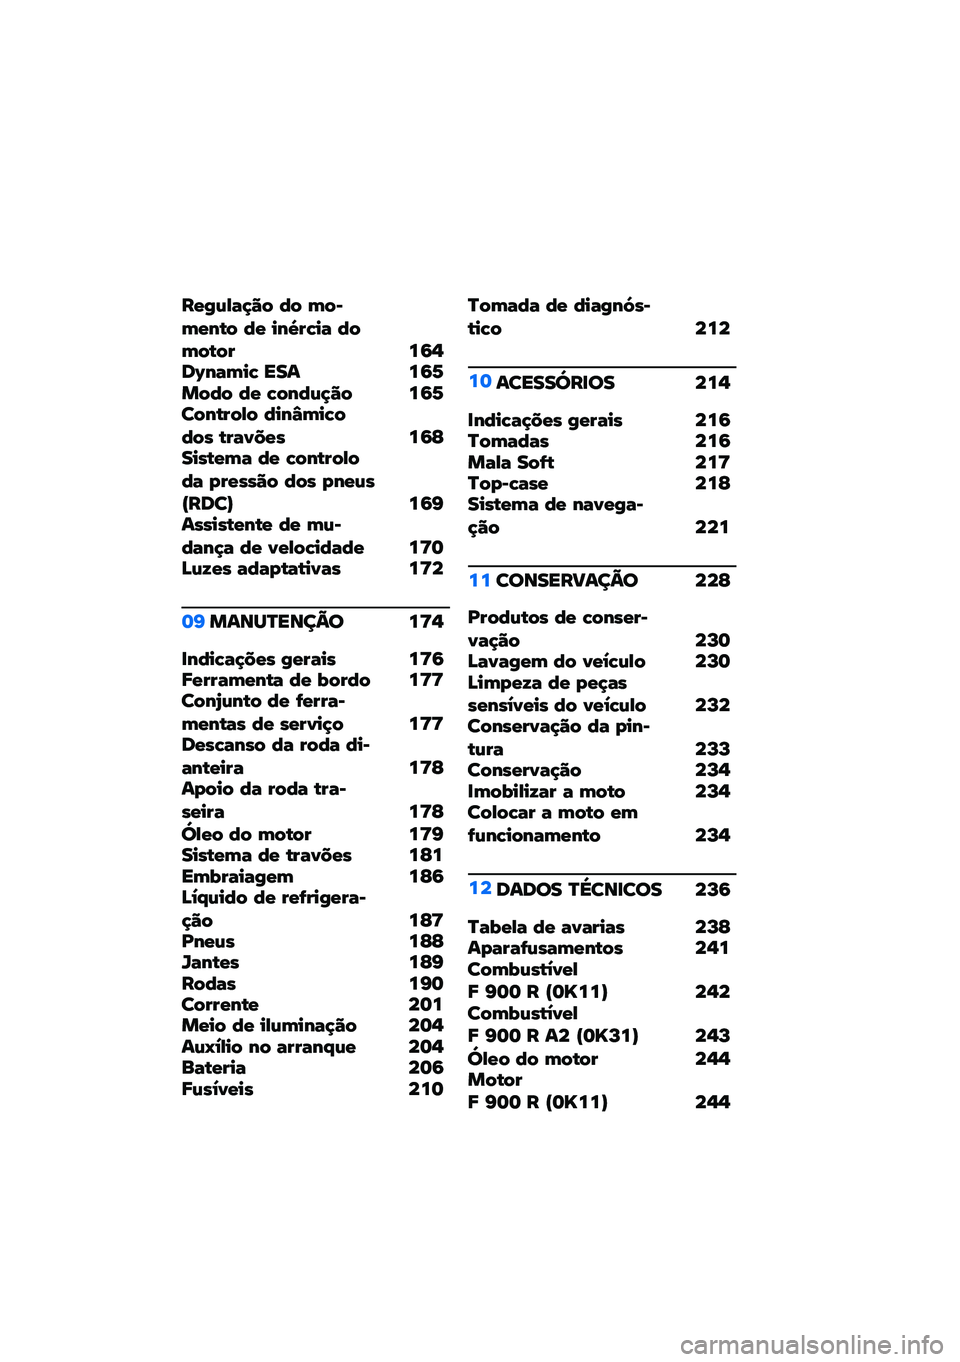 BMW MOTORRAD F 900 R 2021  Manual do condutor (in Portuguese) ��!� �)�#��:�� �3� �-��@�-�!�0�(� �3�! ��0�4�"�5�� �3��-��(��" ��6�$��T�0��-��5 ��� ��6�1���3� �3�! �5��0�3�)�:�� ��6�1���0�(�"��#� �3��0�[�-��5��3�� �(�"���K�!�